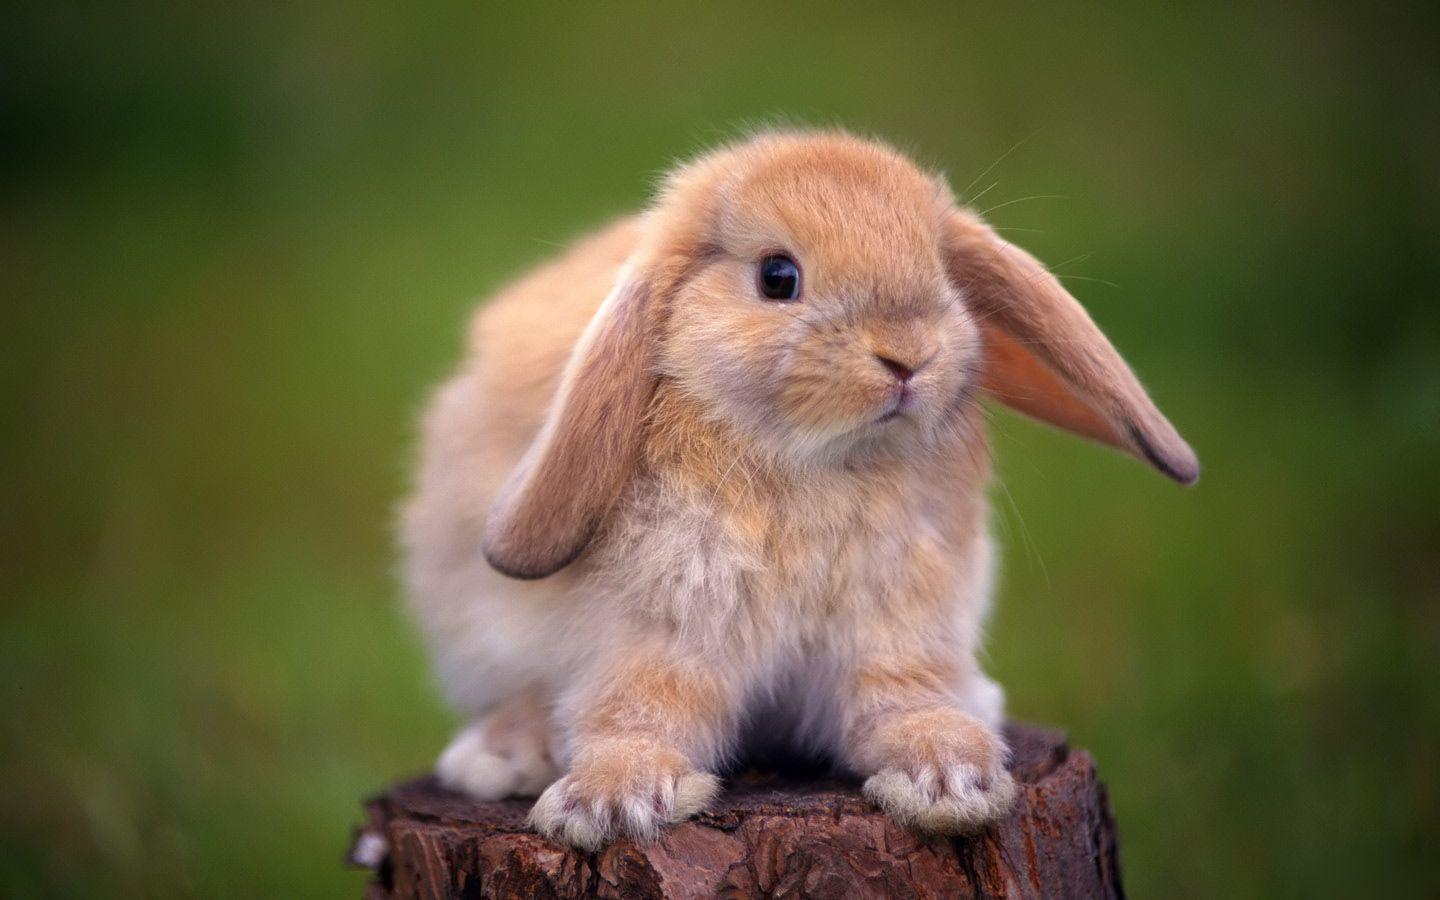 Rabbit HD Wallpaper. Cute Rabbit Desktop Image